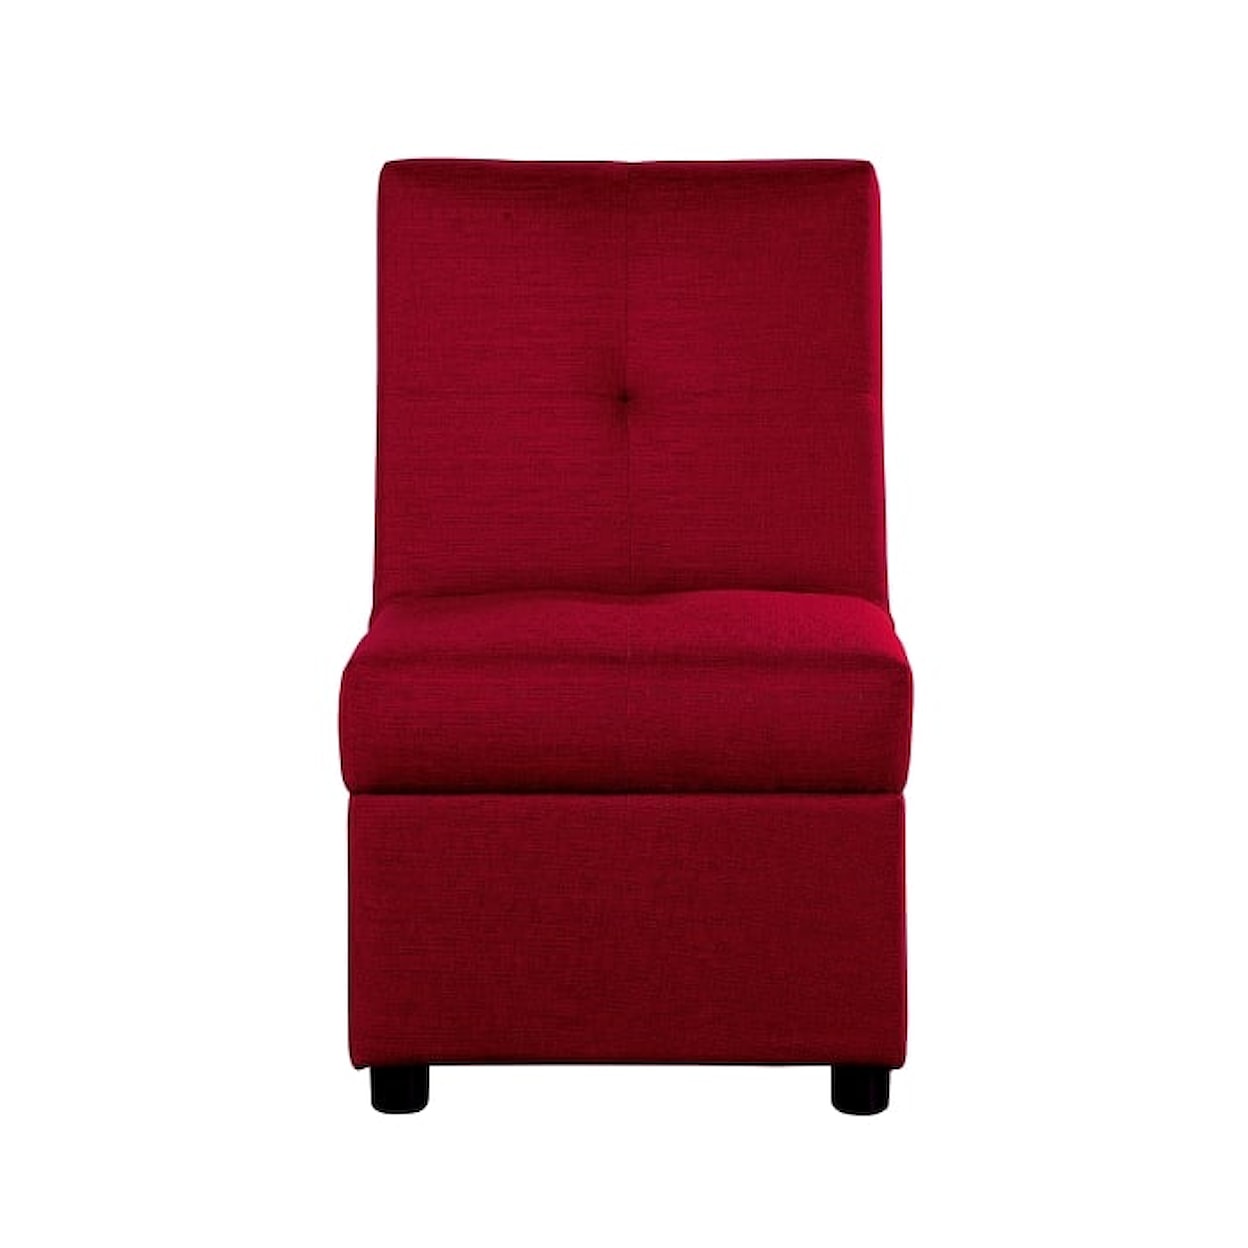 Homelegance Furniture Denby Storage Ottoman/Chair